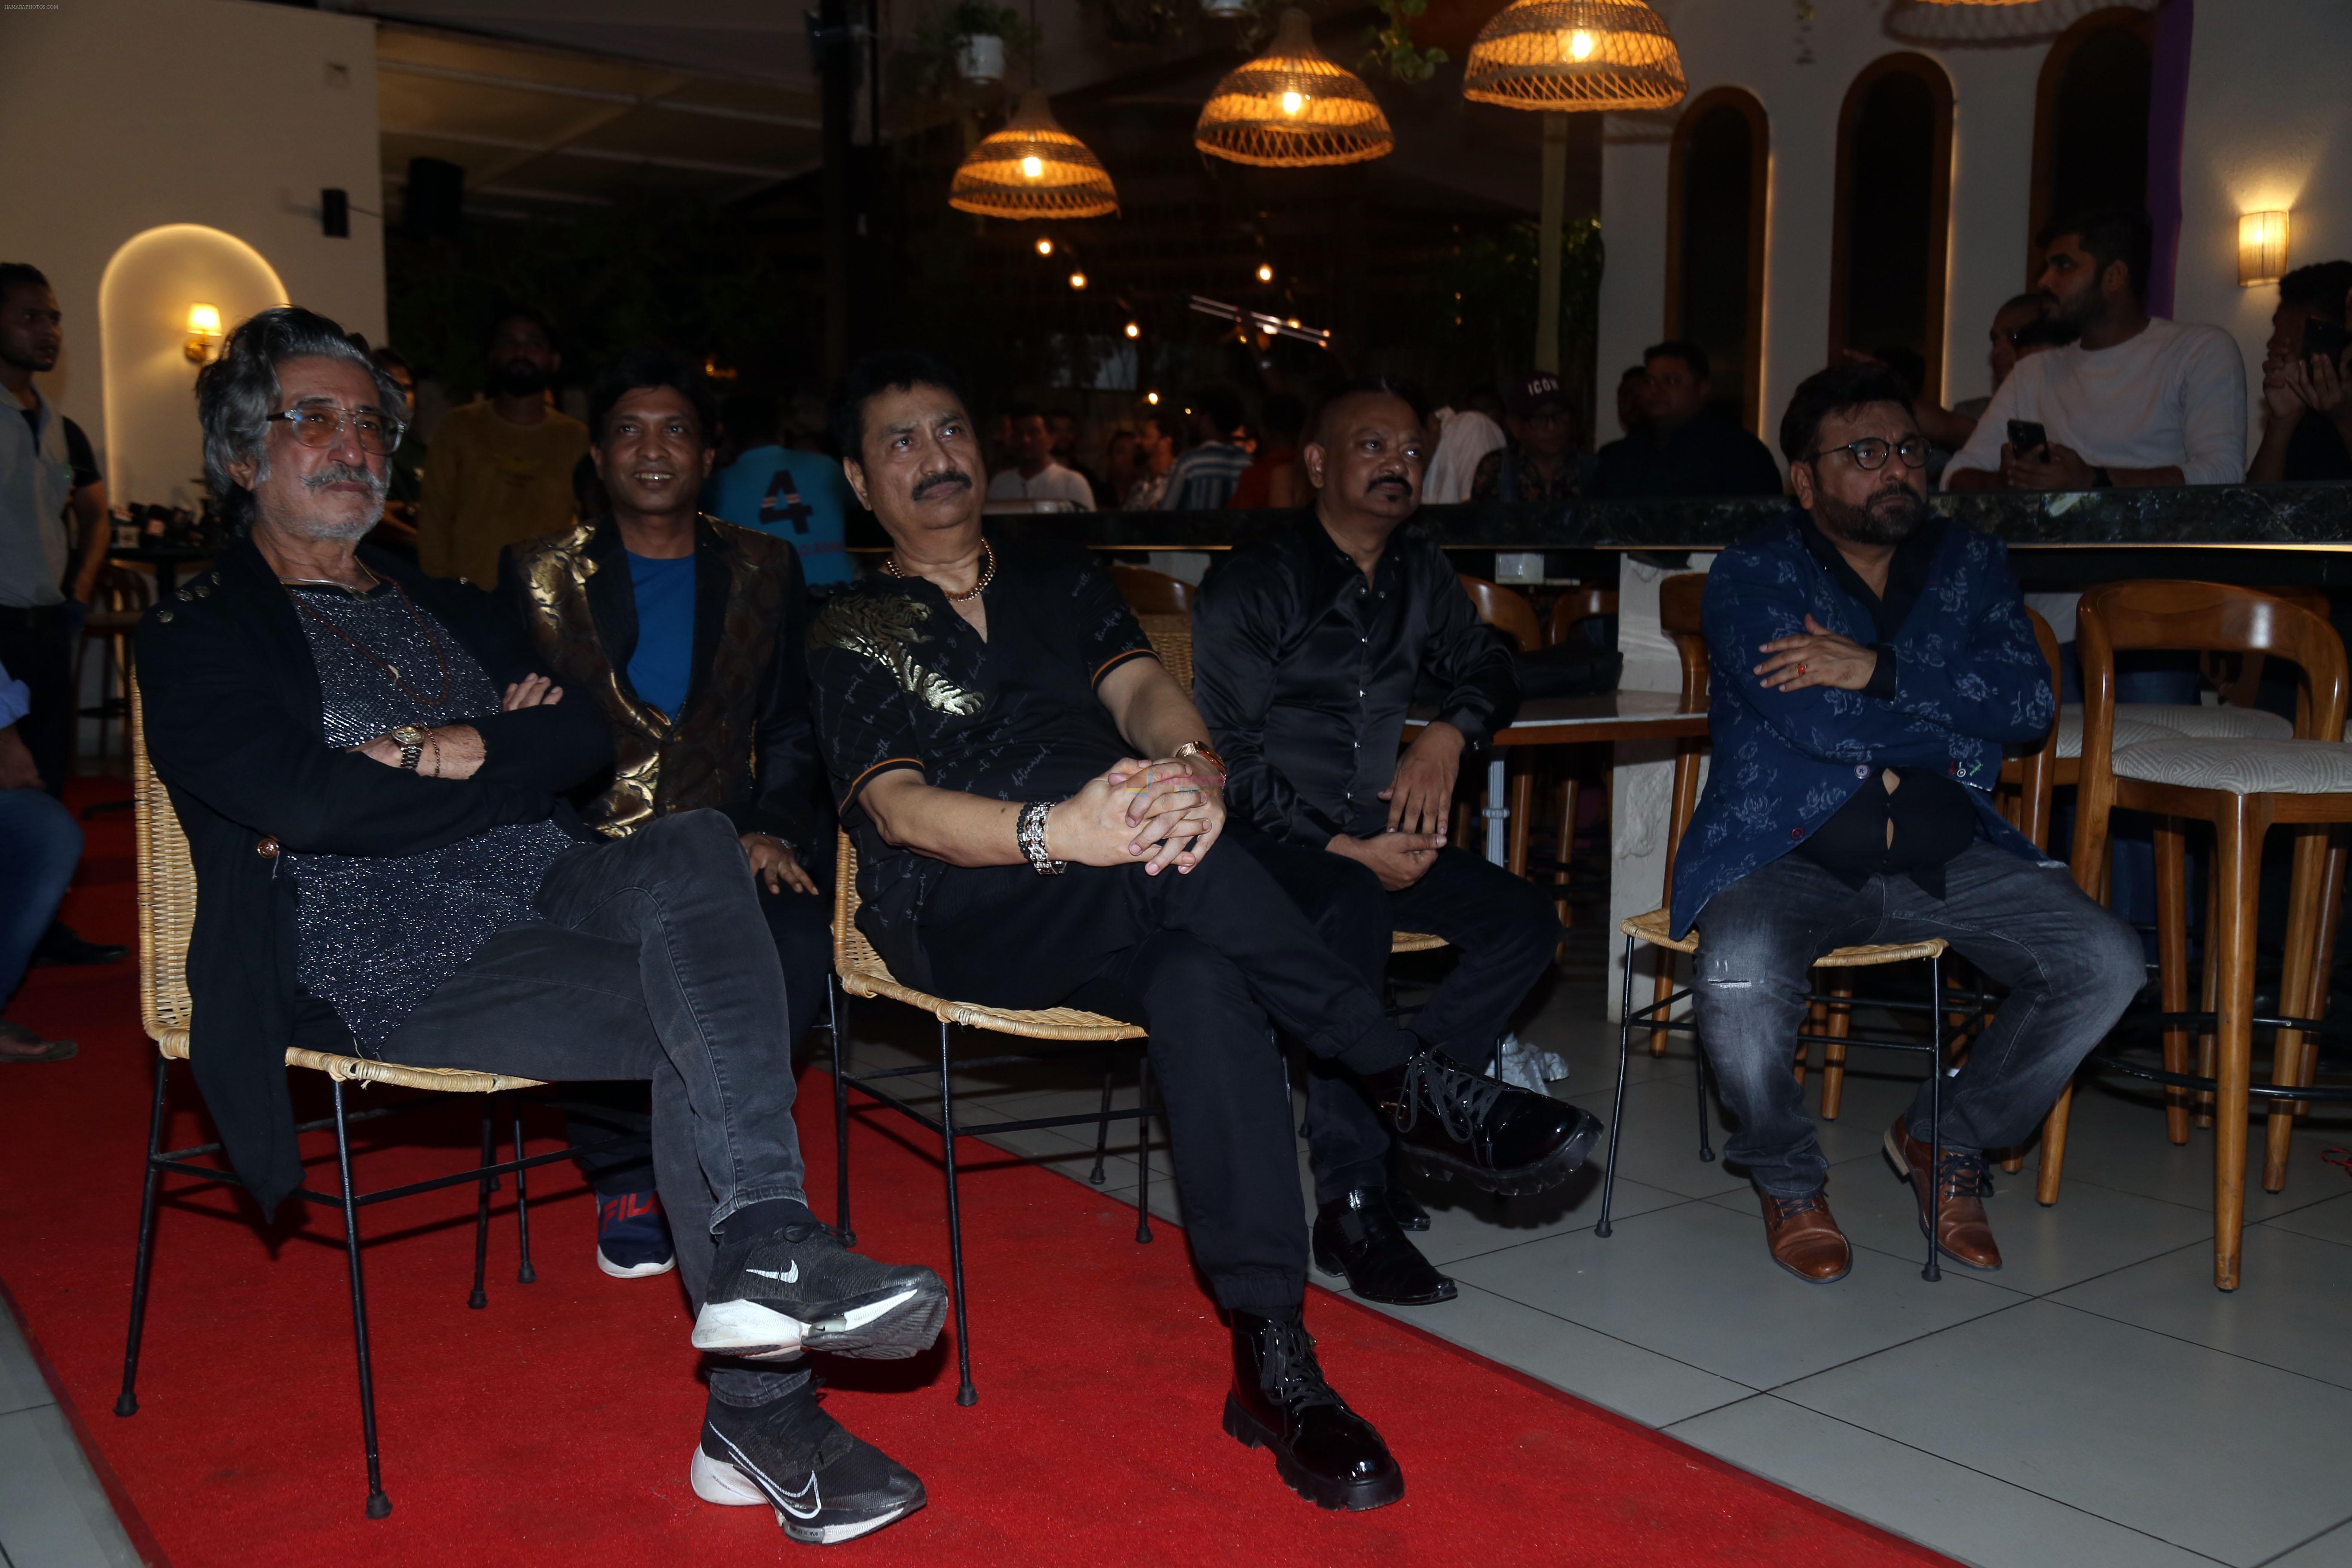 Kumar Sanu, Neeraj Mishra, Shakti Kapoor, Sunil Pal at the Launch of Octave Music and Ishq Hai Song on 22nd August 2023